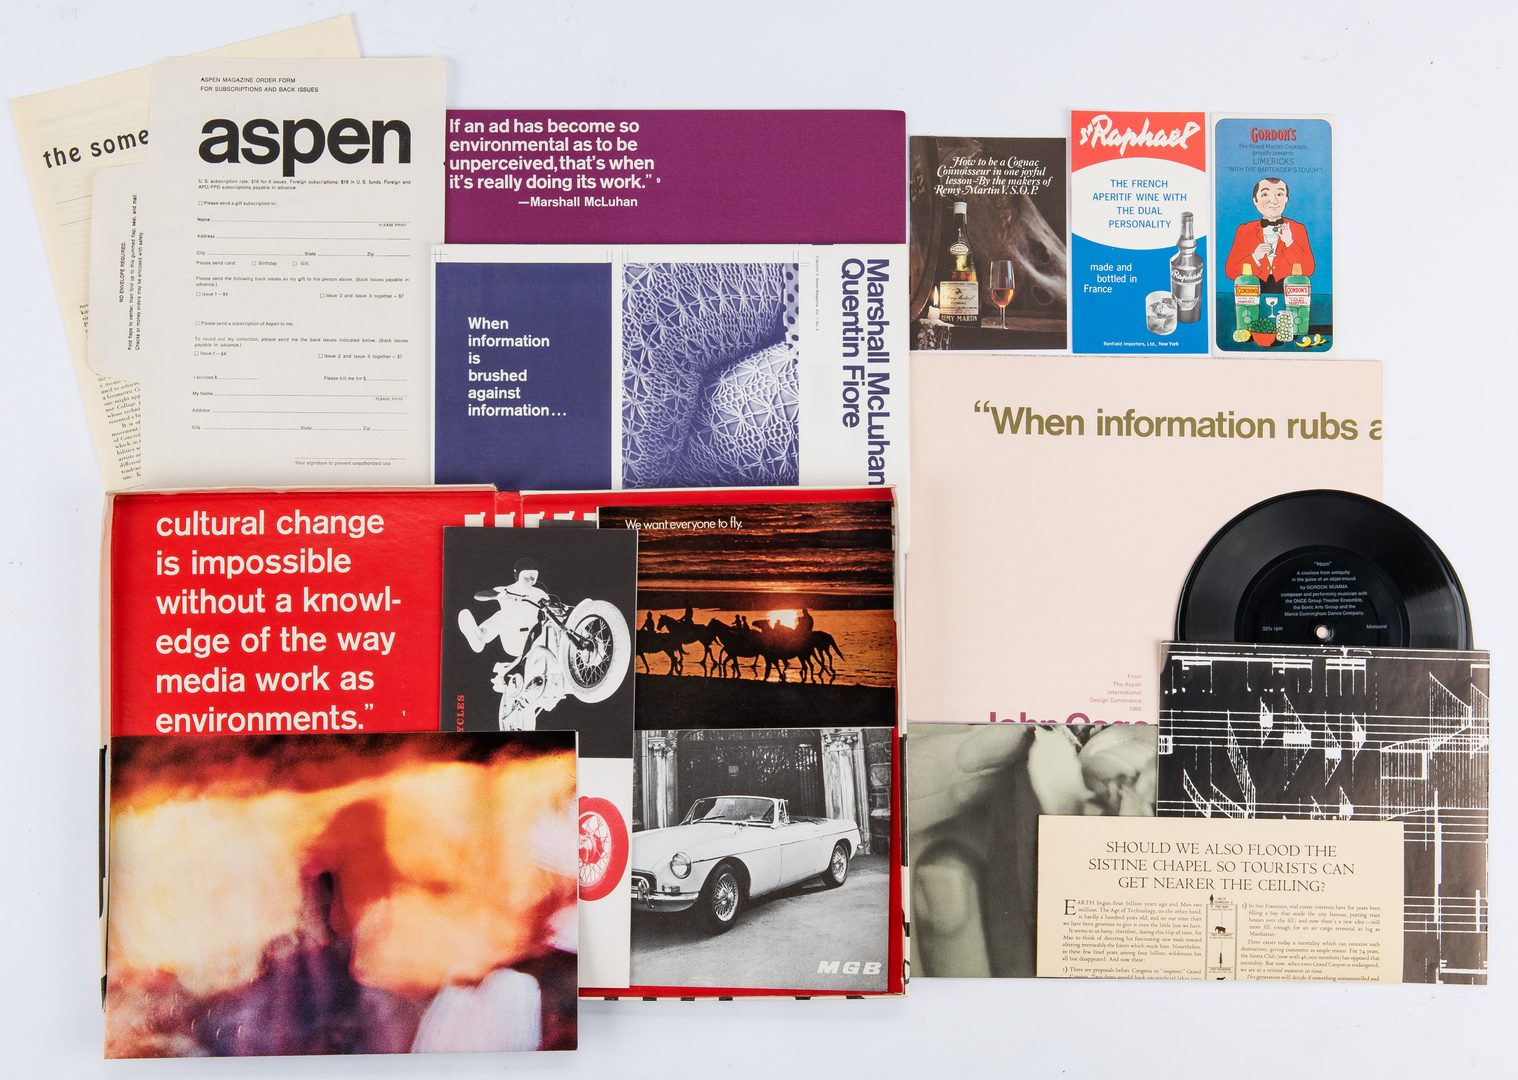 Lot 526: 4 Aspen Magazines, incl. Warhol Designed "Pop Art" Issue